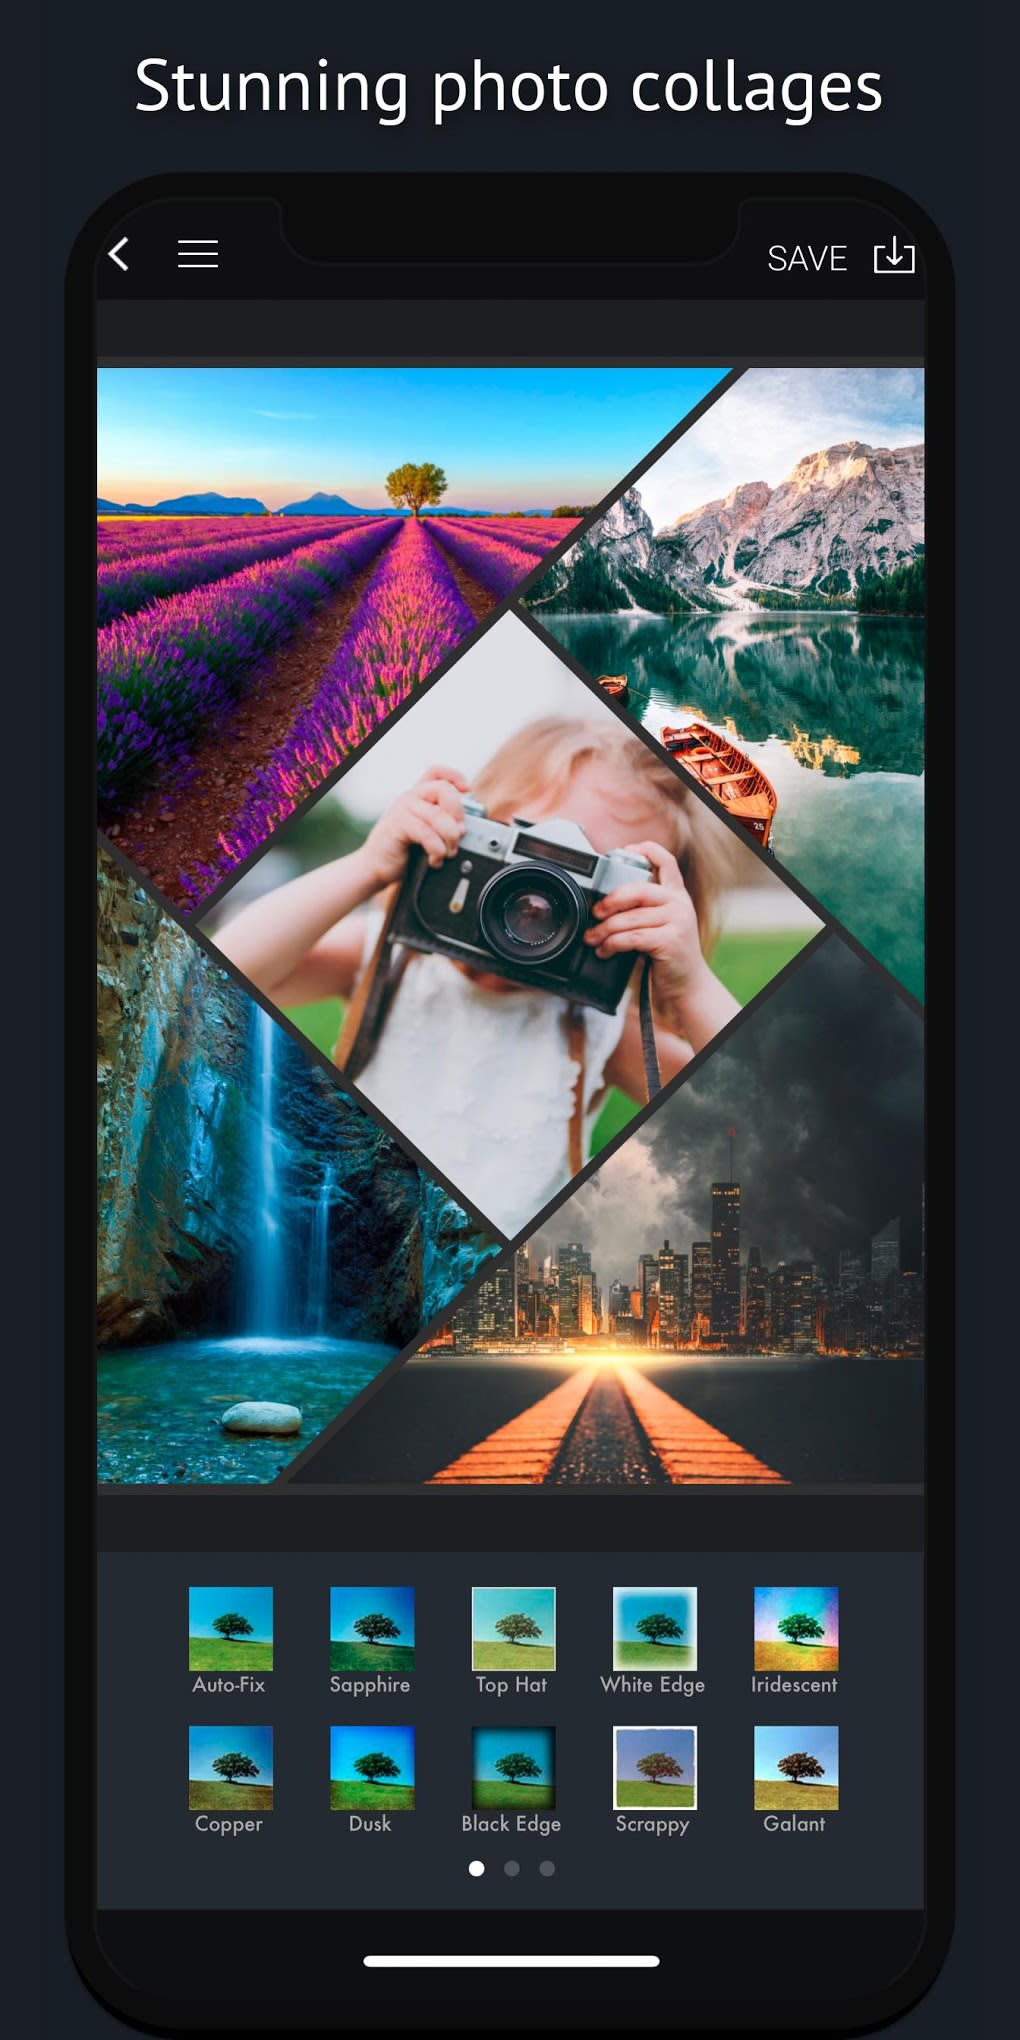 piZap: Simple Design & Photo Editor, Collage Maker